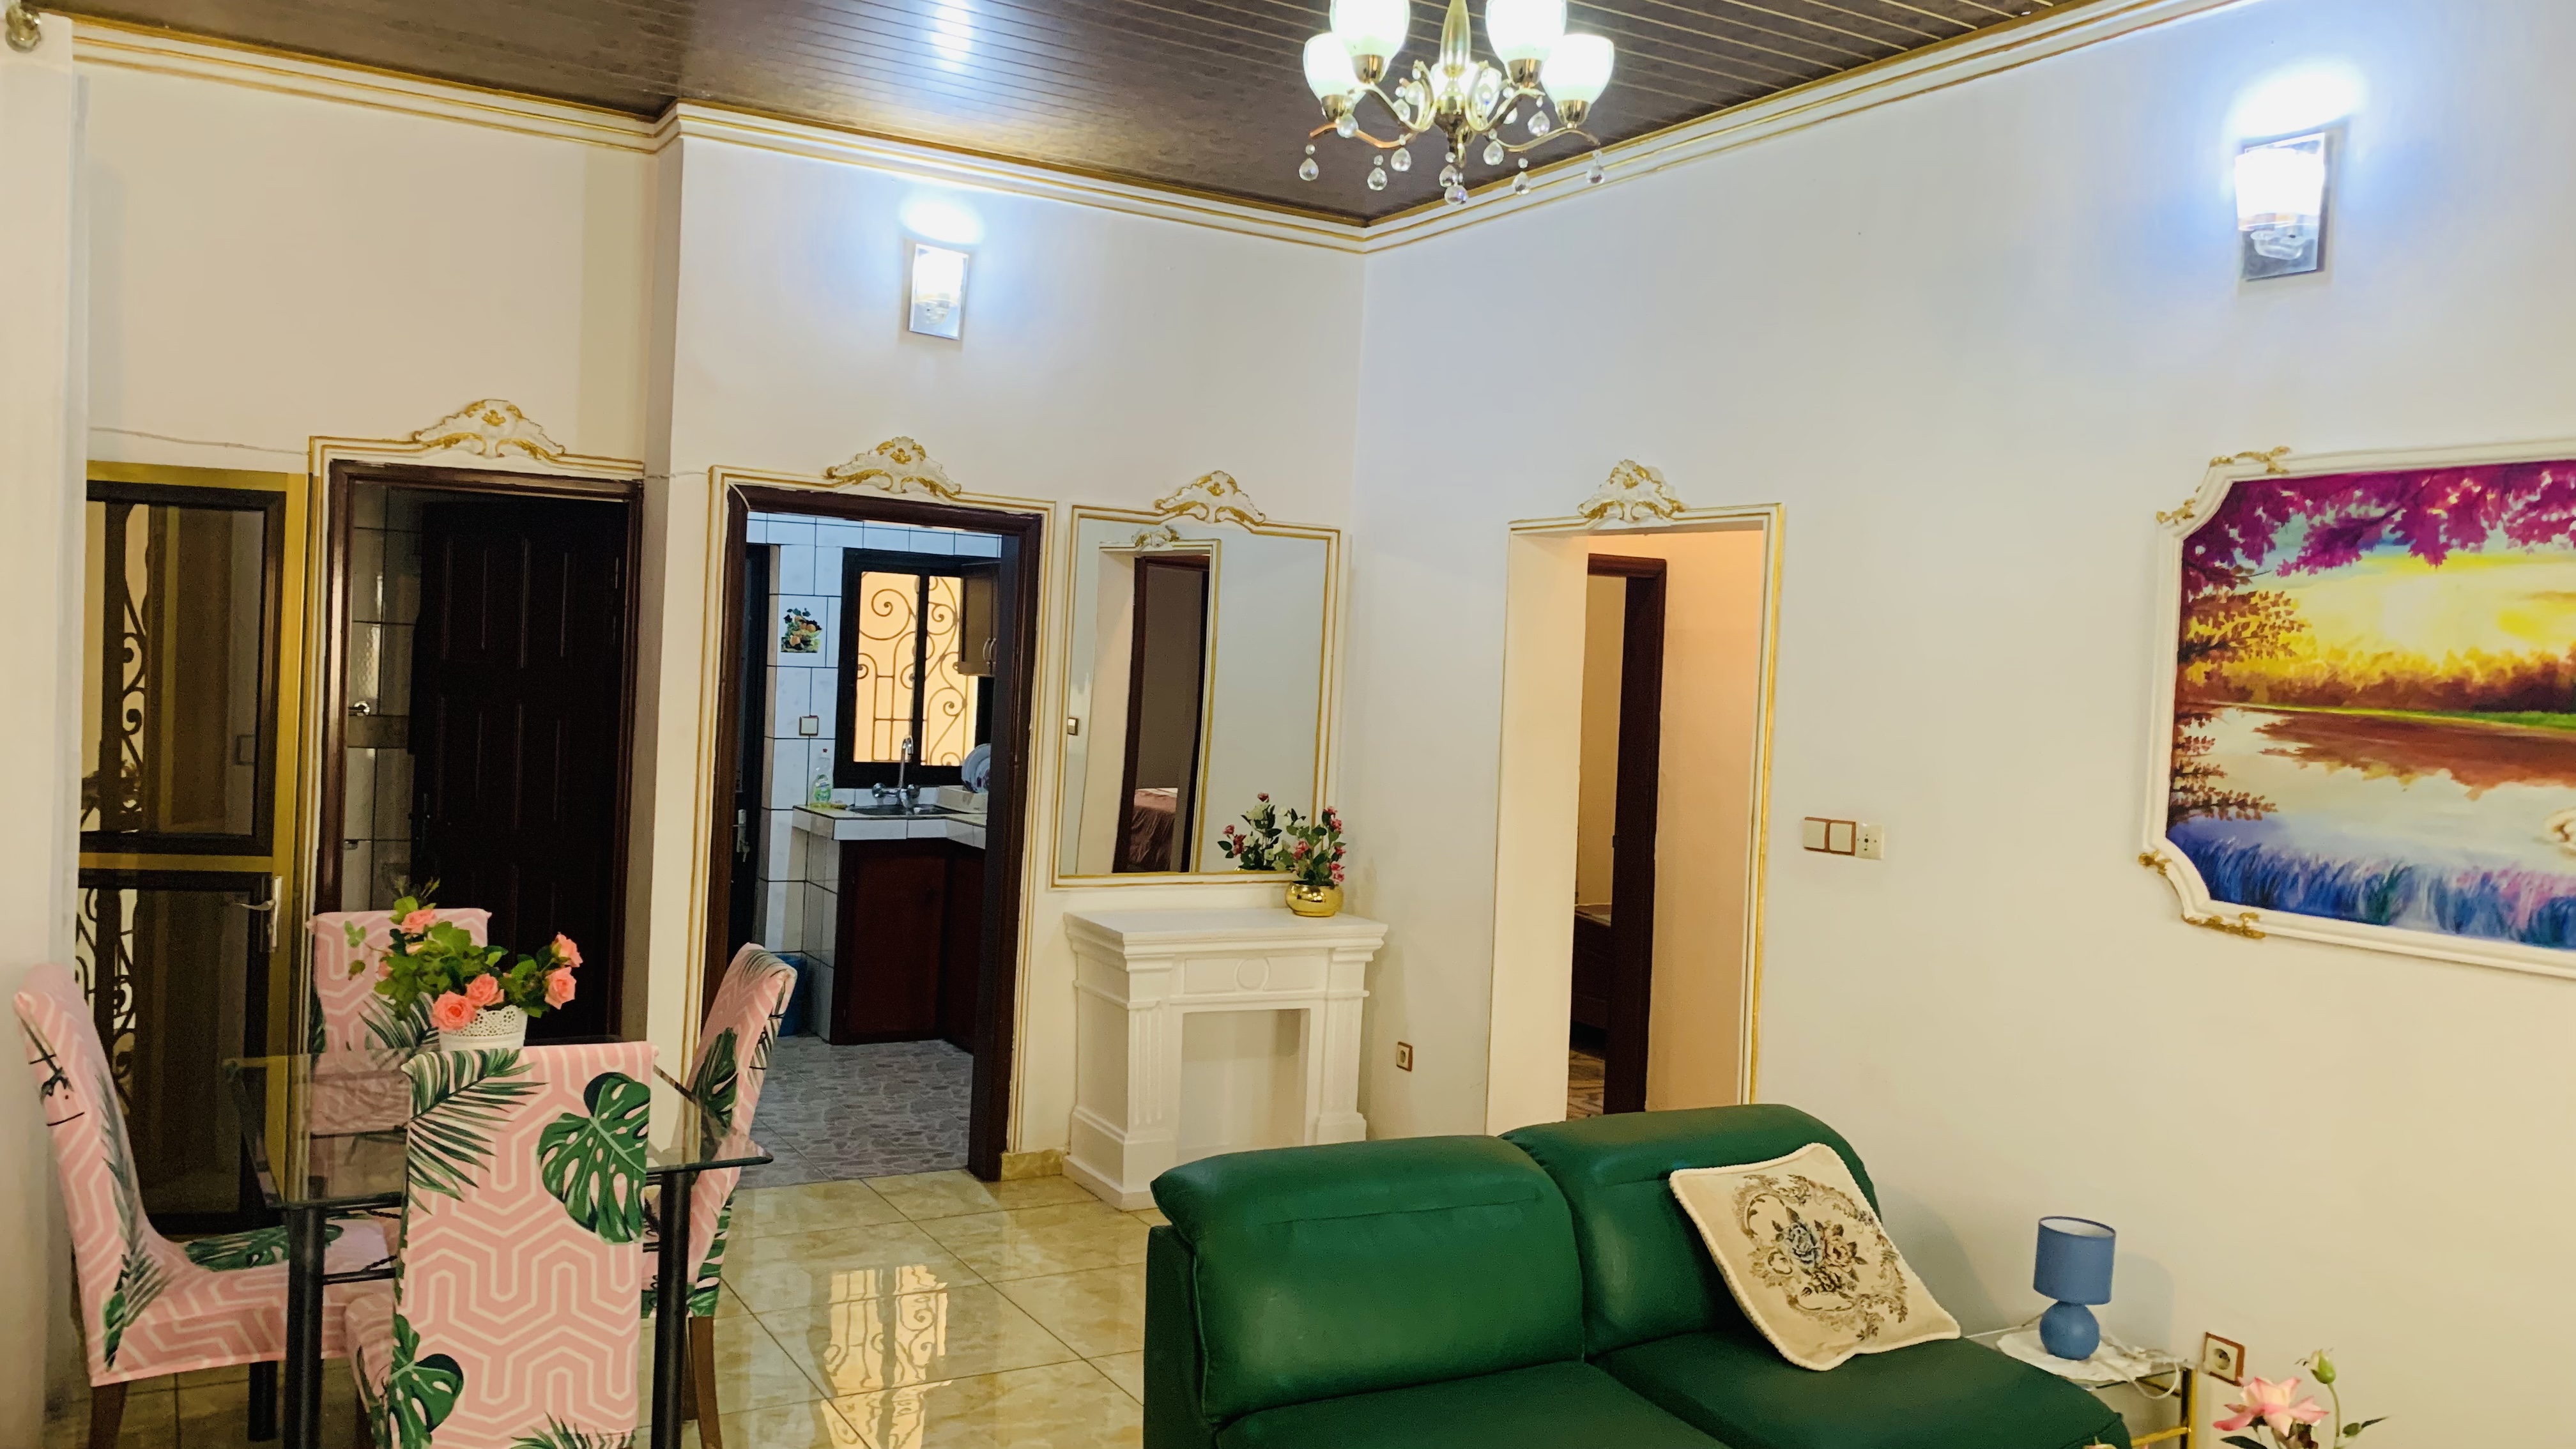 Apartment to rent - Yaoundé, Bastos, Golf - 1 living room(s), 2 bedroom(s), 1 bathroom(s) - 50 000 FCFA / month